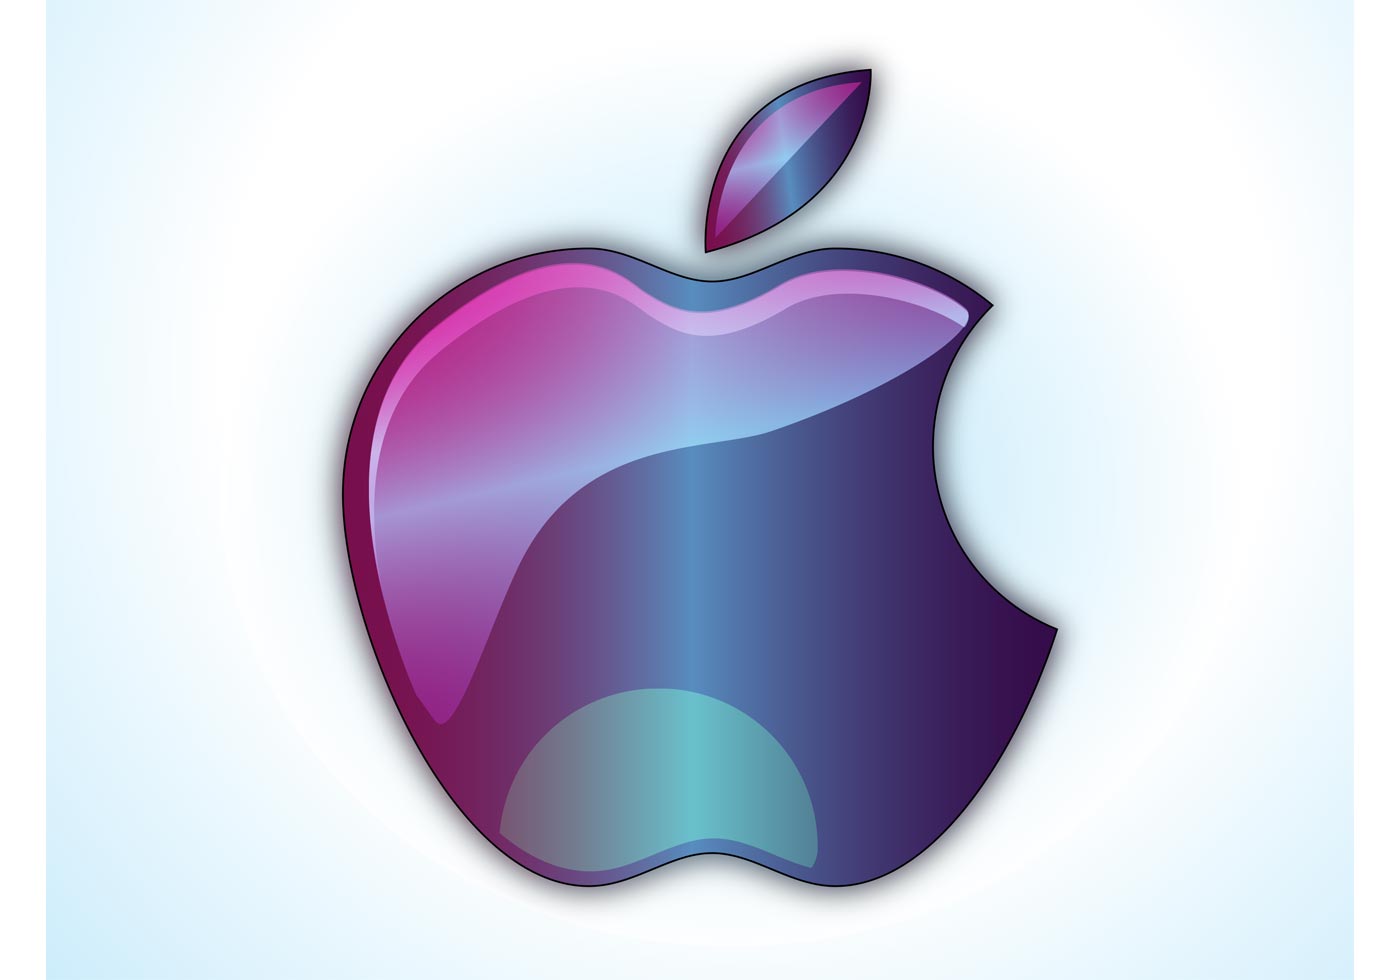 Shiny Apple Logo Download Free Vectors Clipart Graphics And Vector Art